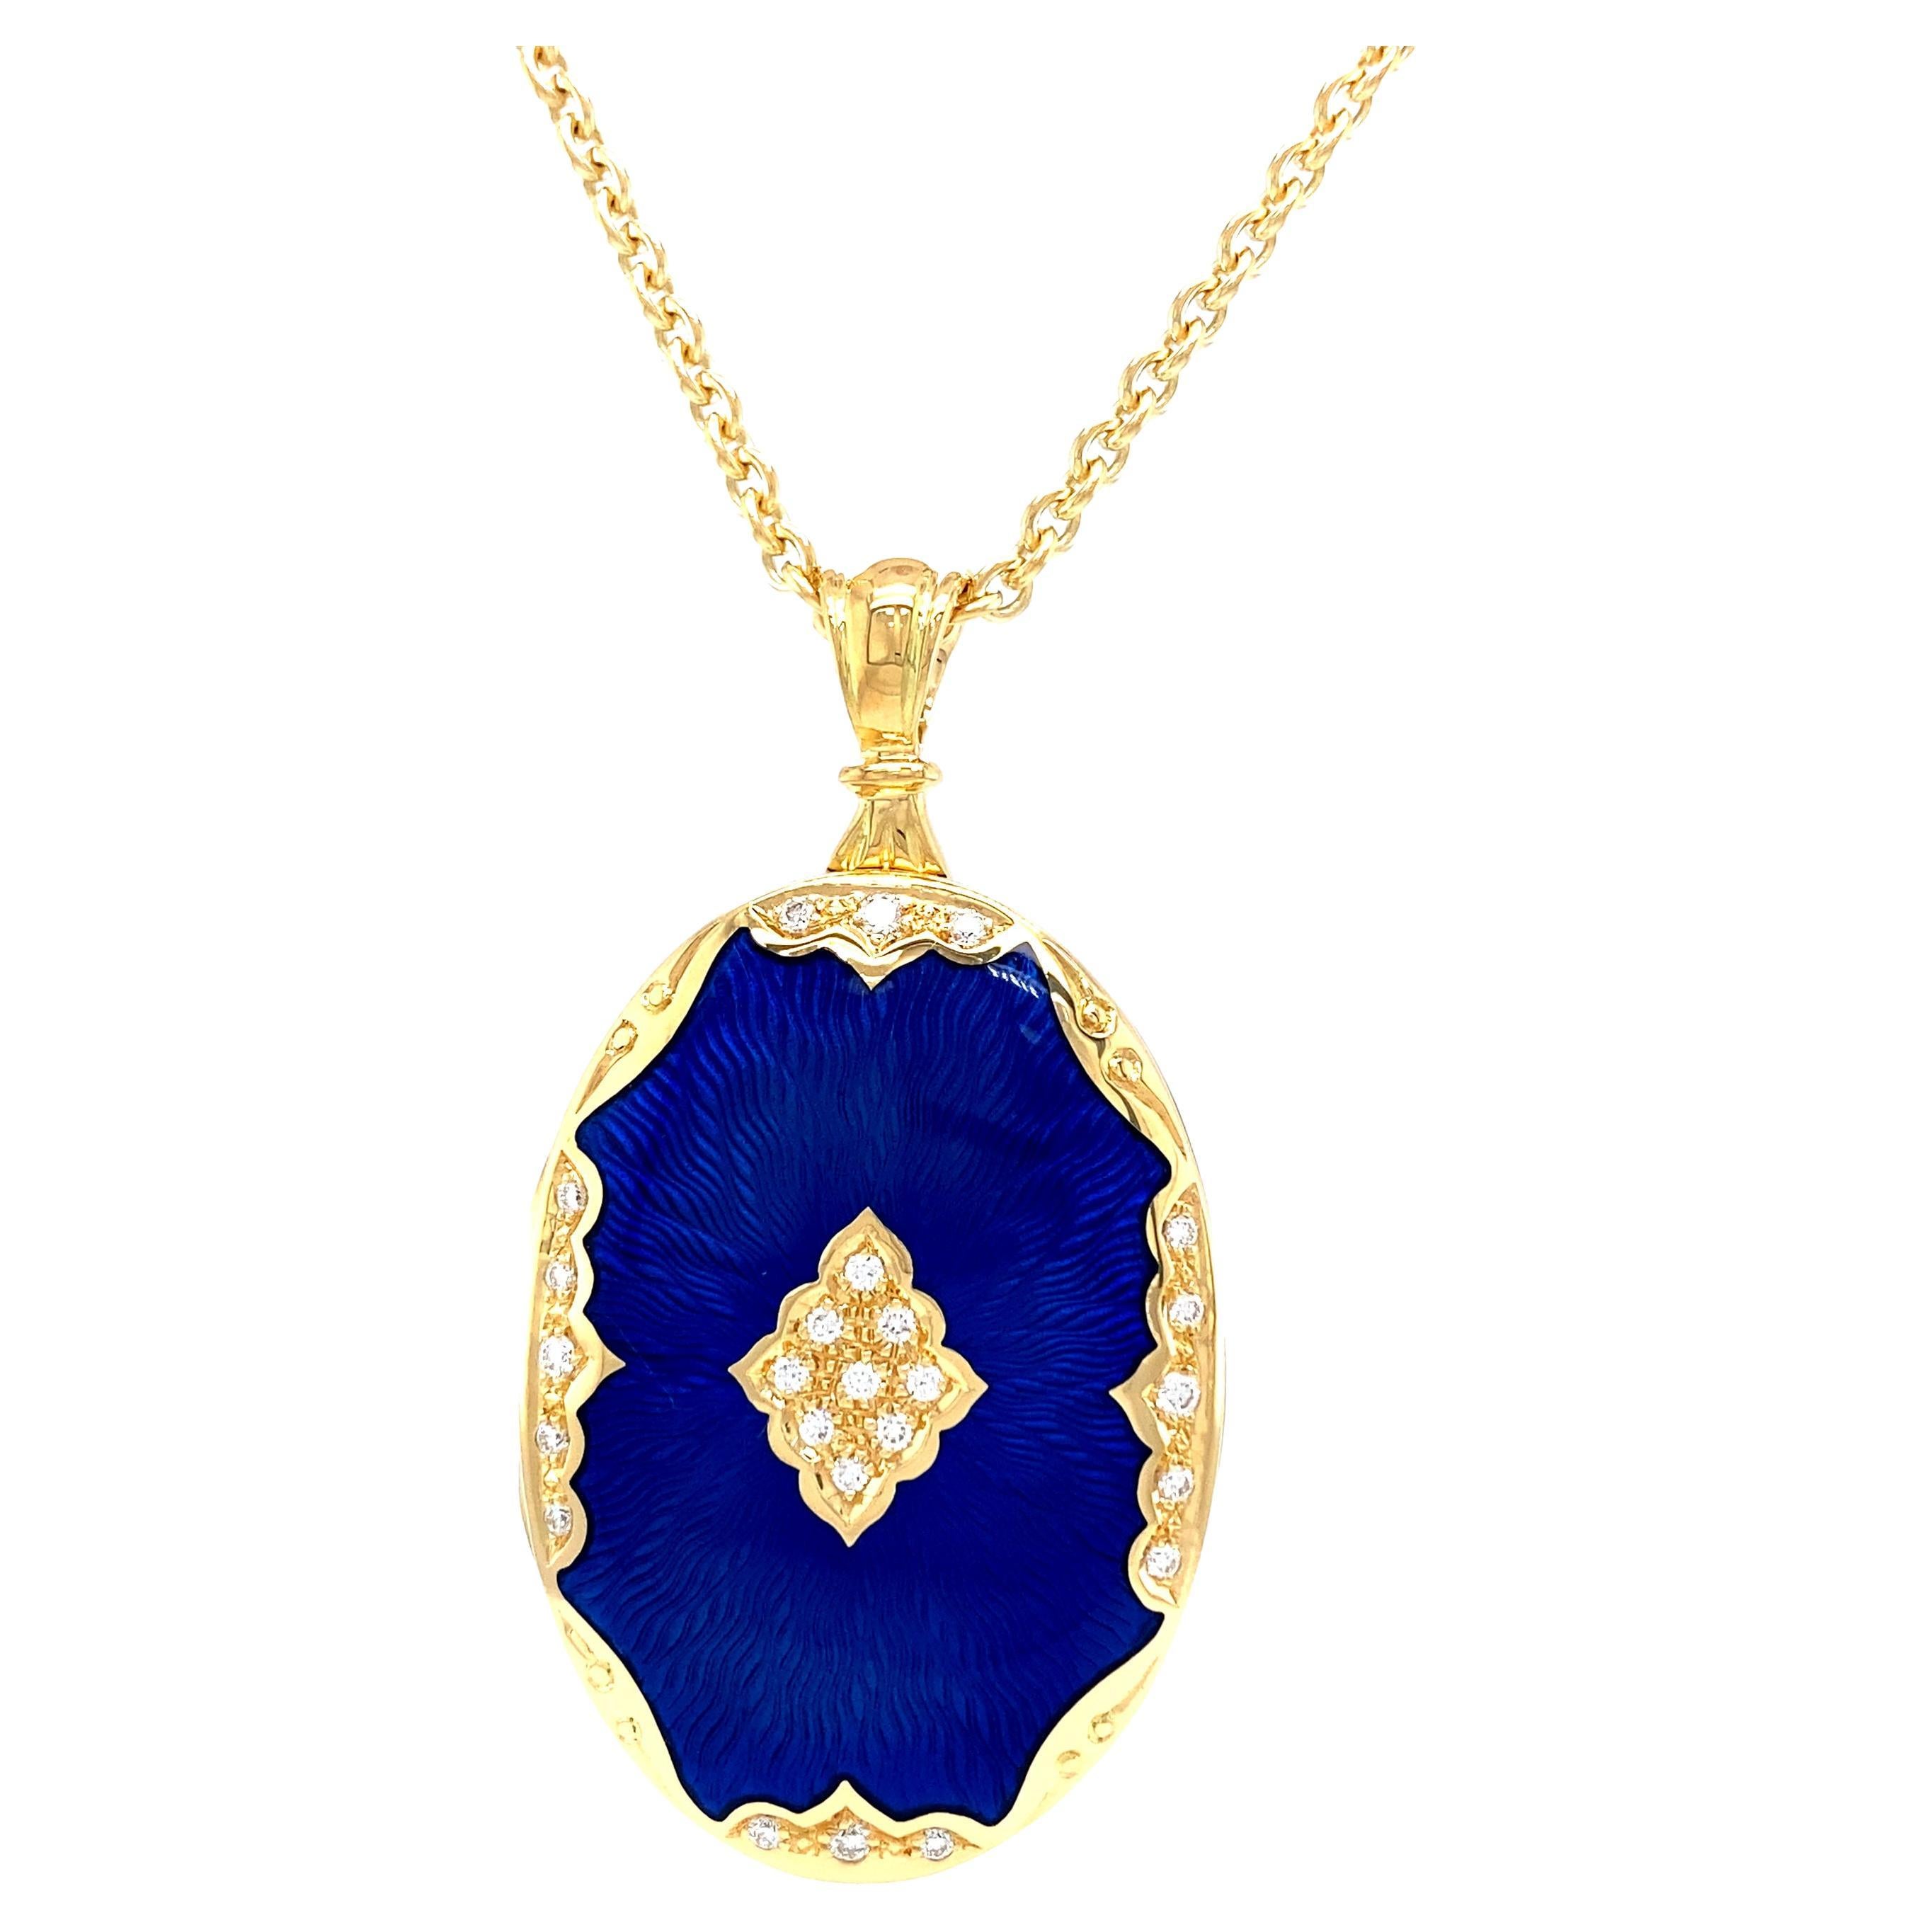 Oval Locket Pendant Necklace 18k Yellow Gold Blue Enamel 25 Diamonds 0.19 Carat In New Condition For Sale In Pforzheim, DE